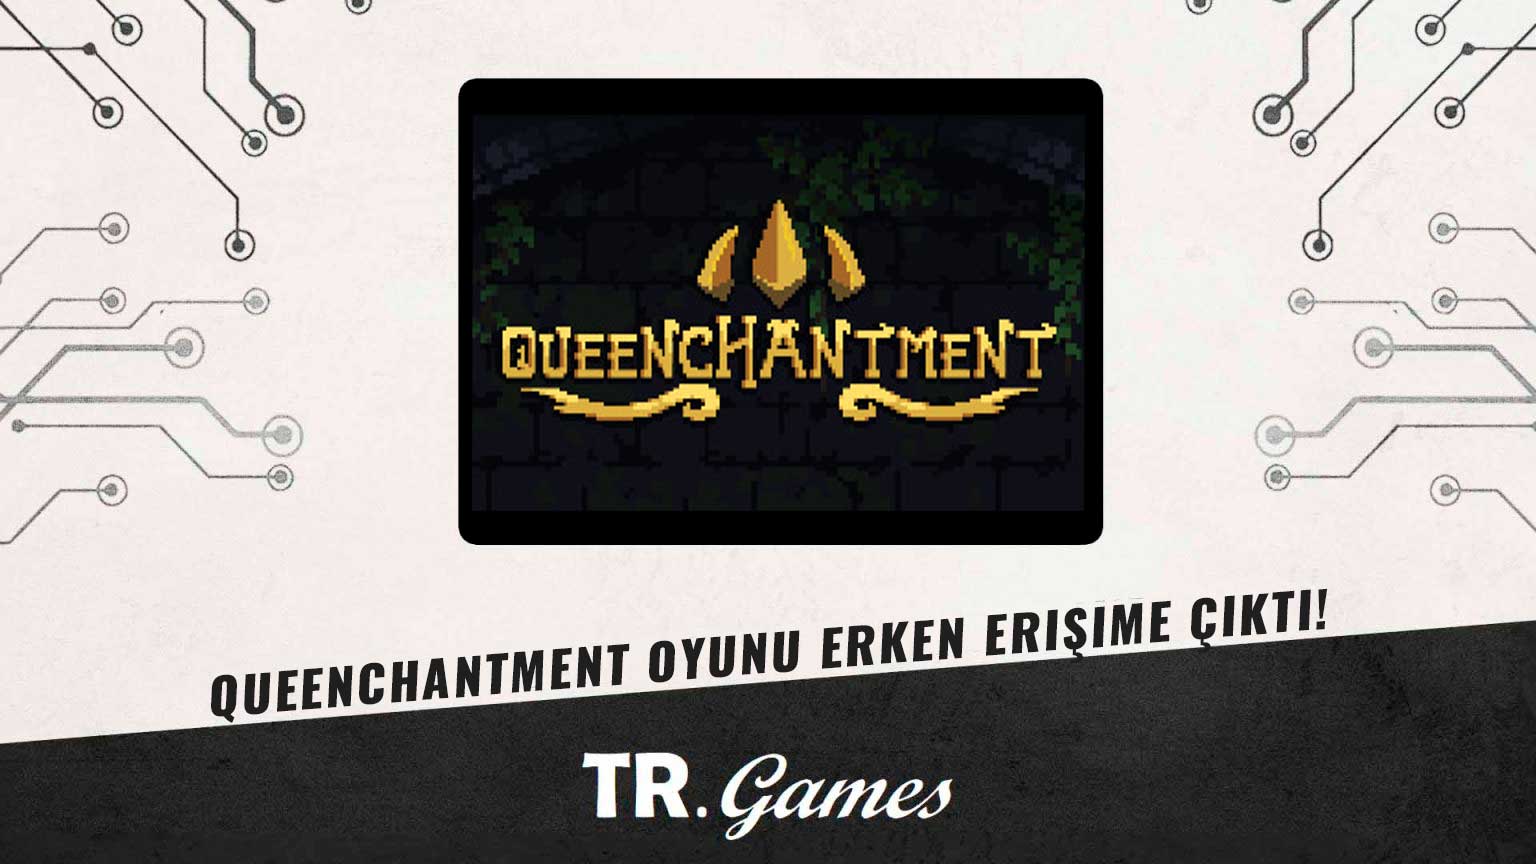 queenchantment-banner